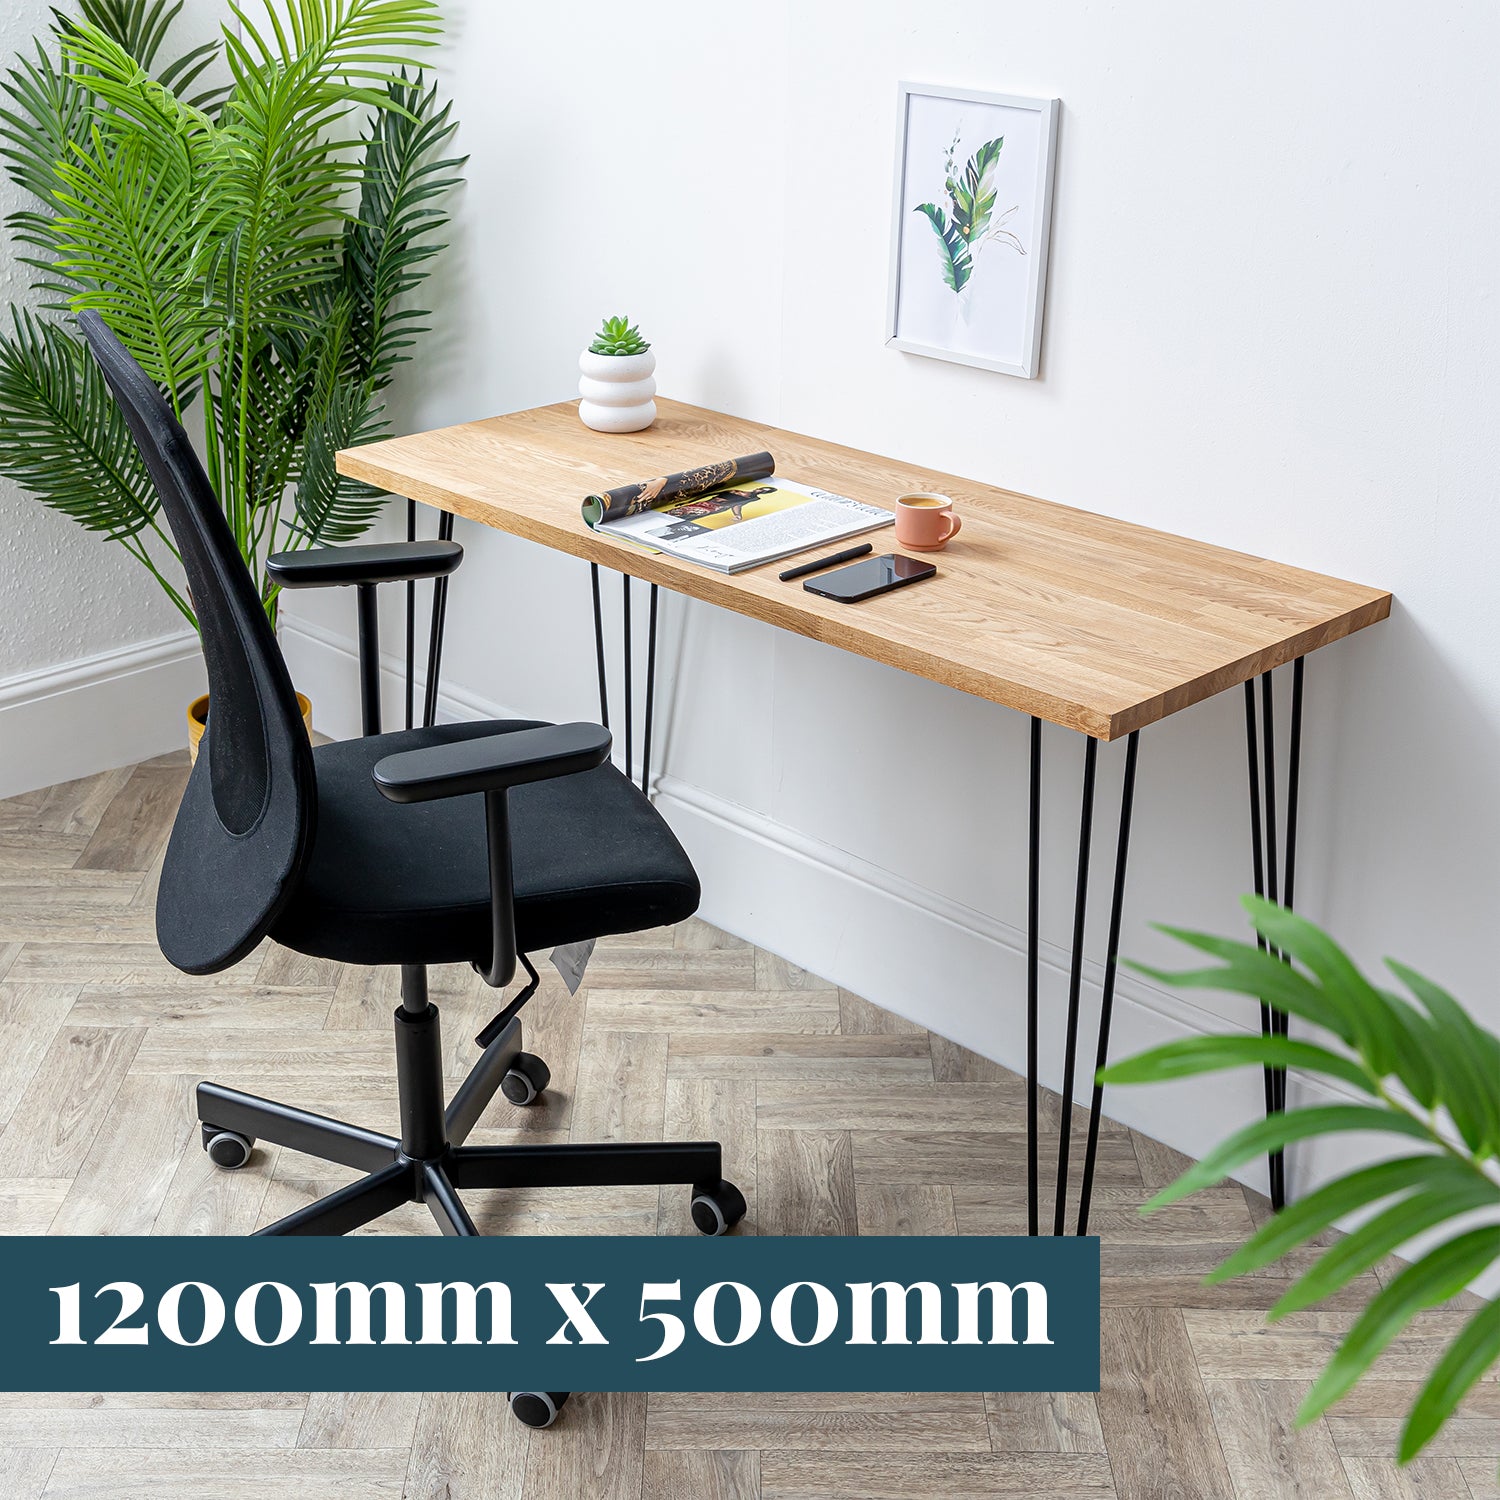 Oak Solid Wood Desk with Black Hairpin Legs - 27mm thick desktop #length_1200mm depth_500mm